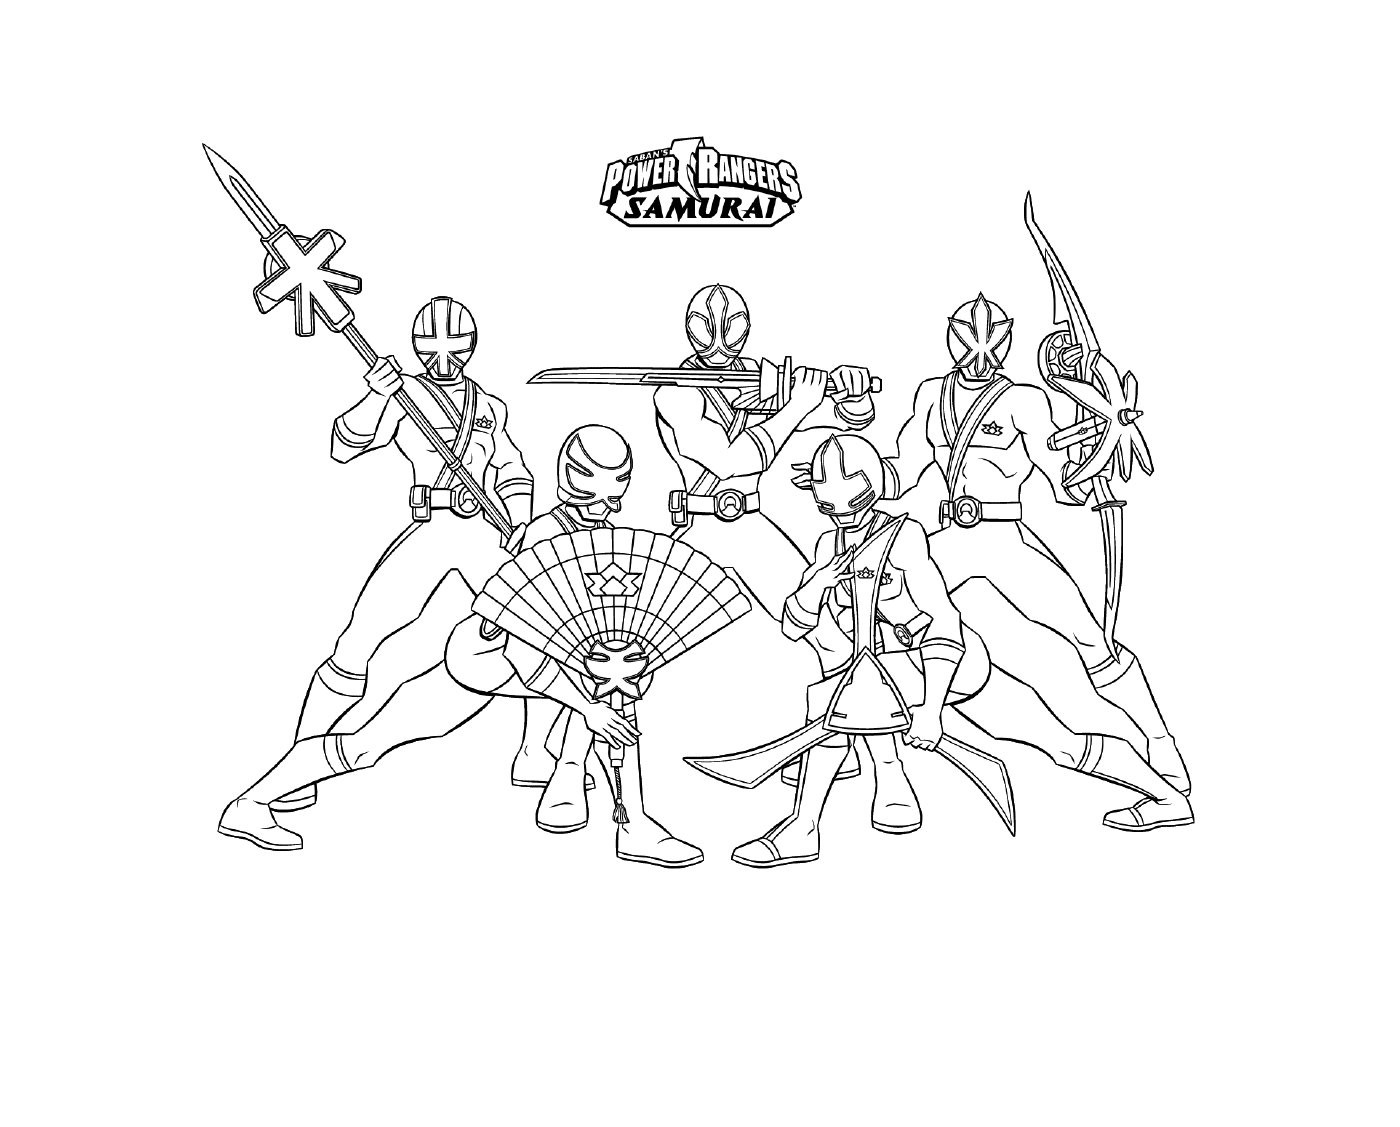   Équipe des Samurai Power Rangers 